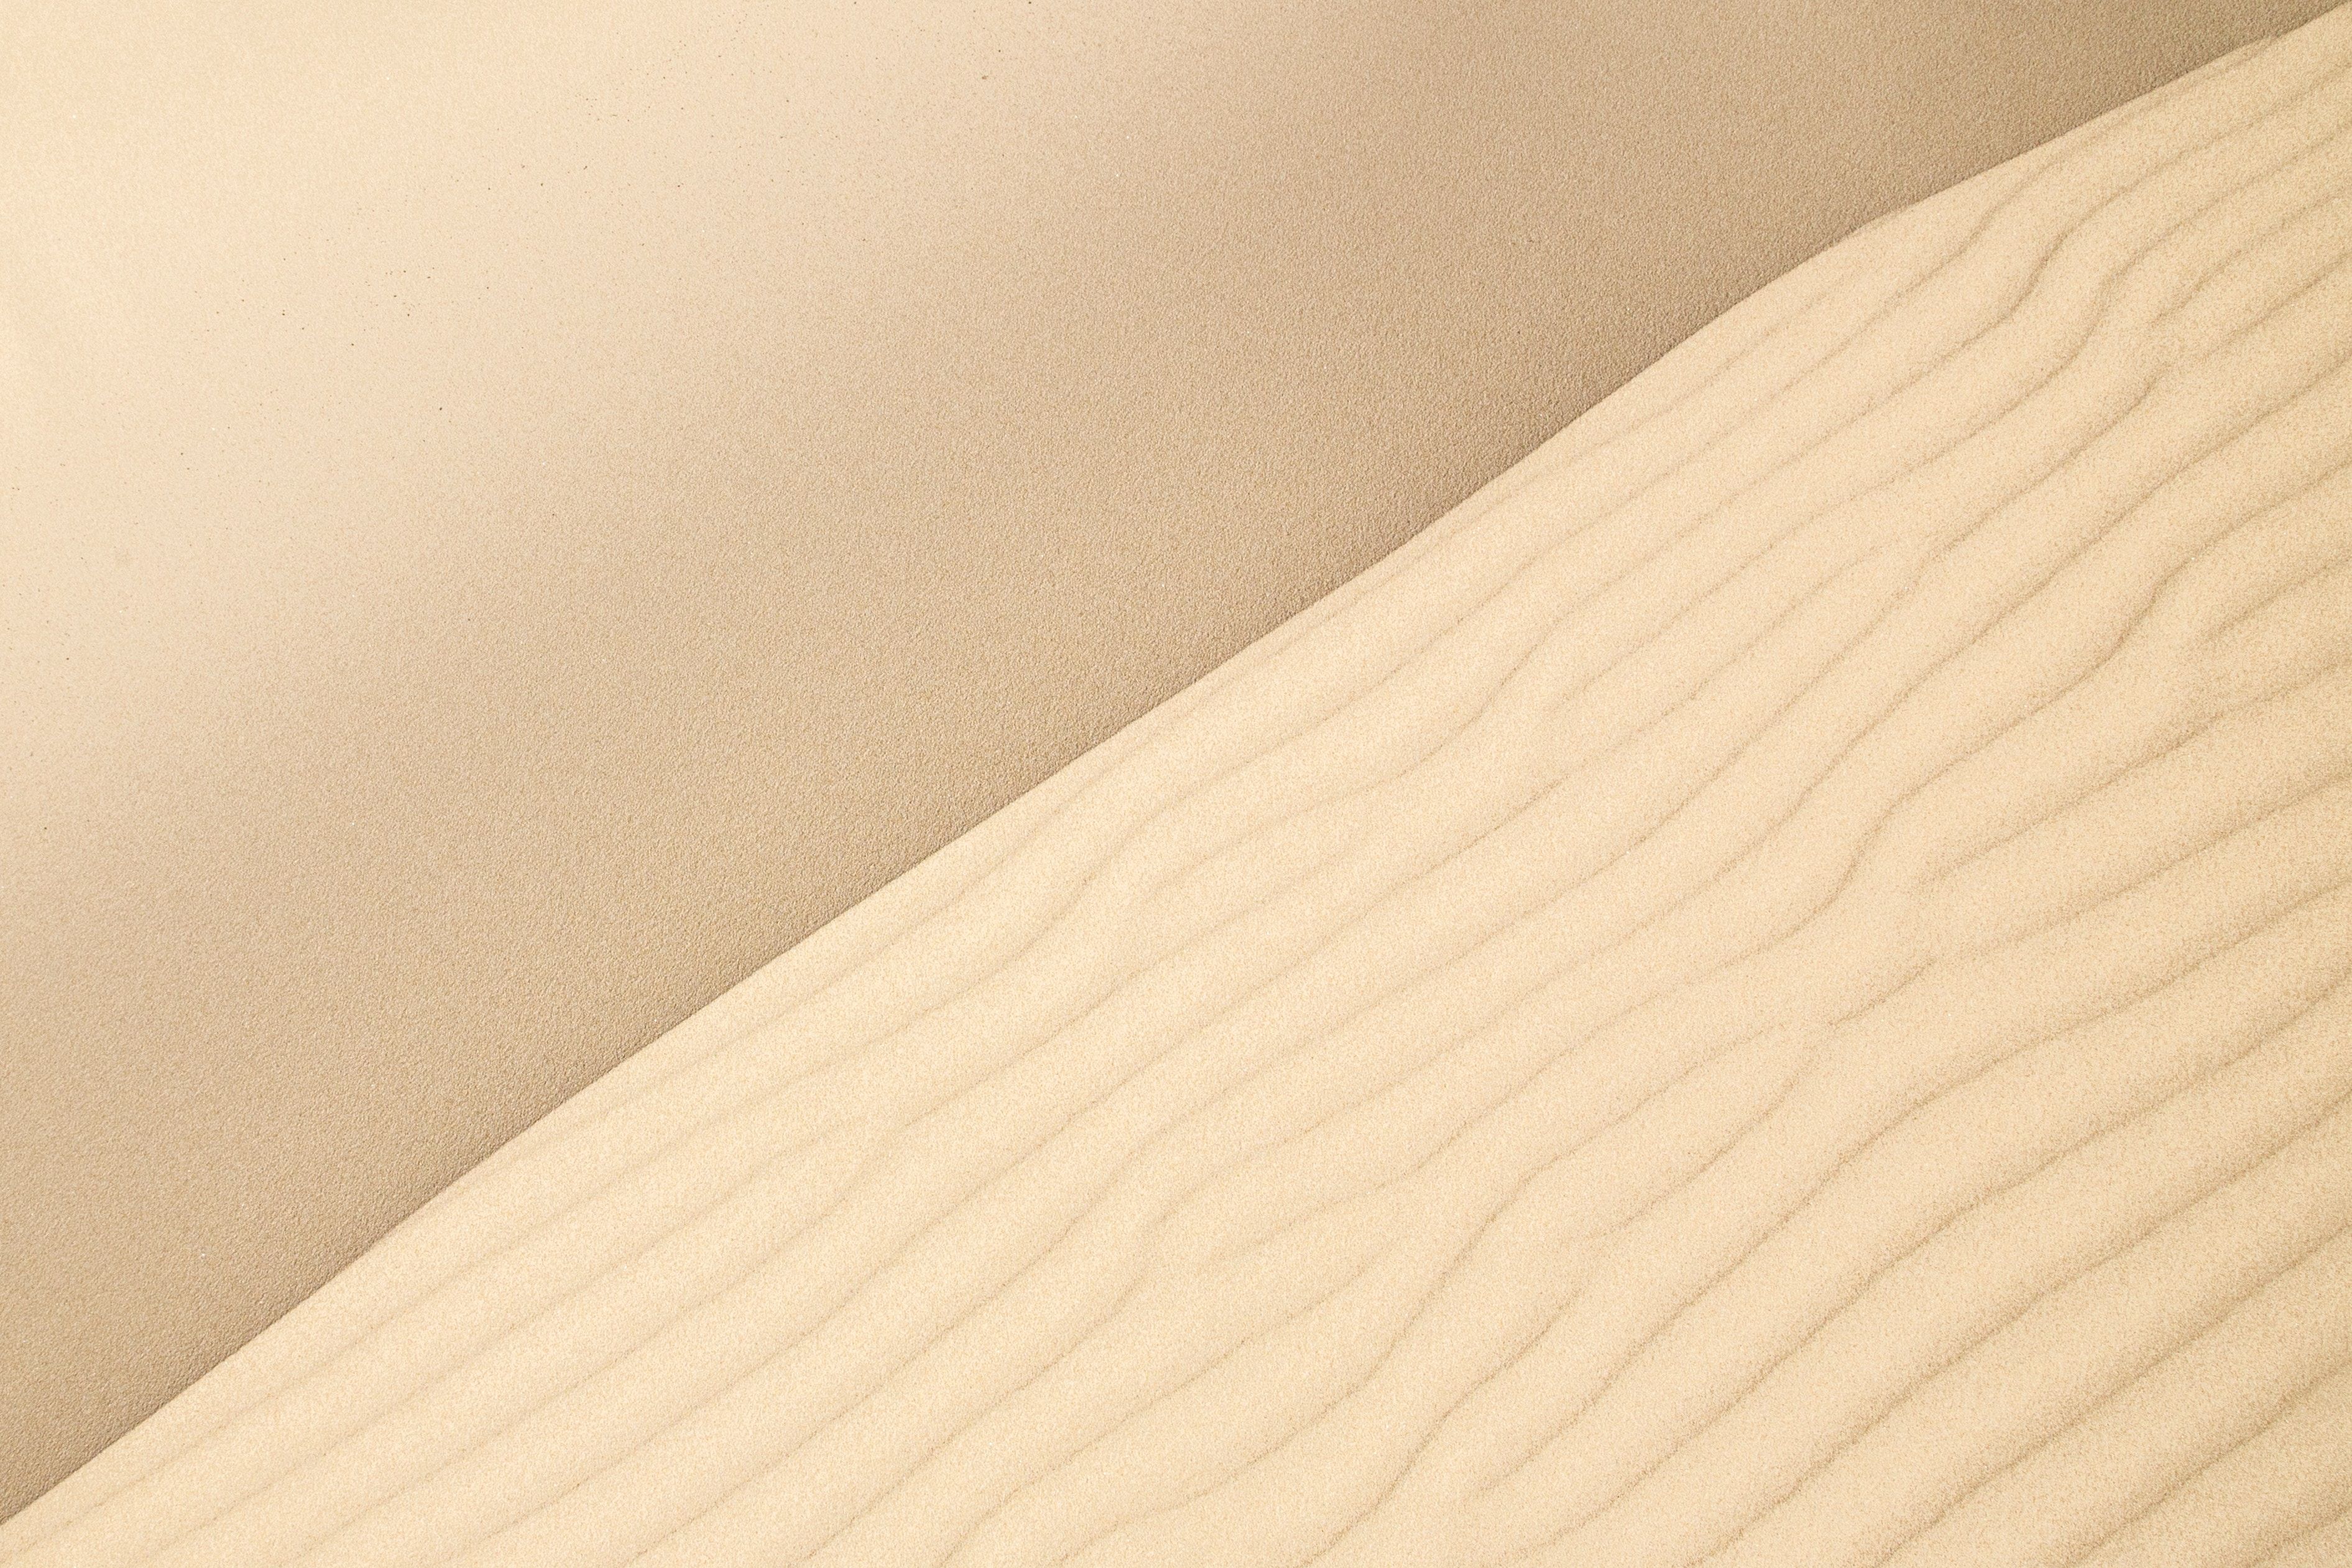 3783x2522 #cream, #desktop background, #arid, #ripple, #cream color, #sand, #desktop wallpaper, #wallpaper hd, #hd wallpaper, #wallpaper, # wallpaper, #hd background, #desert, #duneropple, #desktop background, #surface, #sand dune, #Free